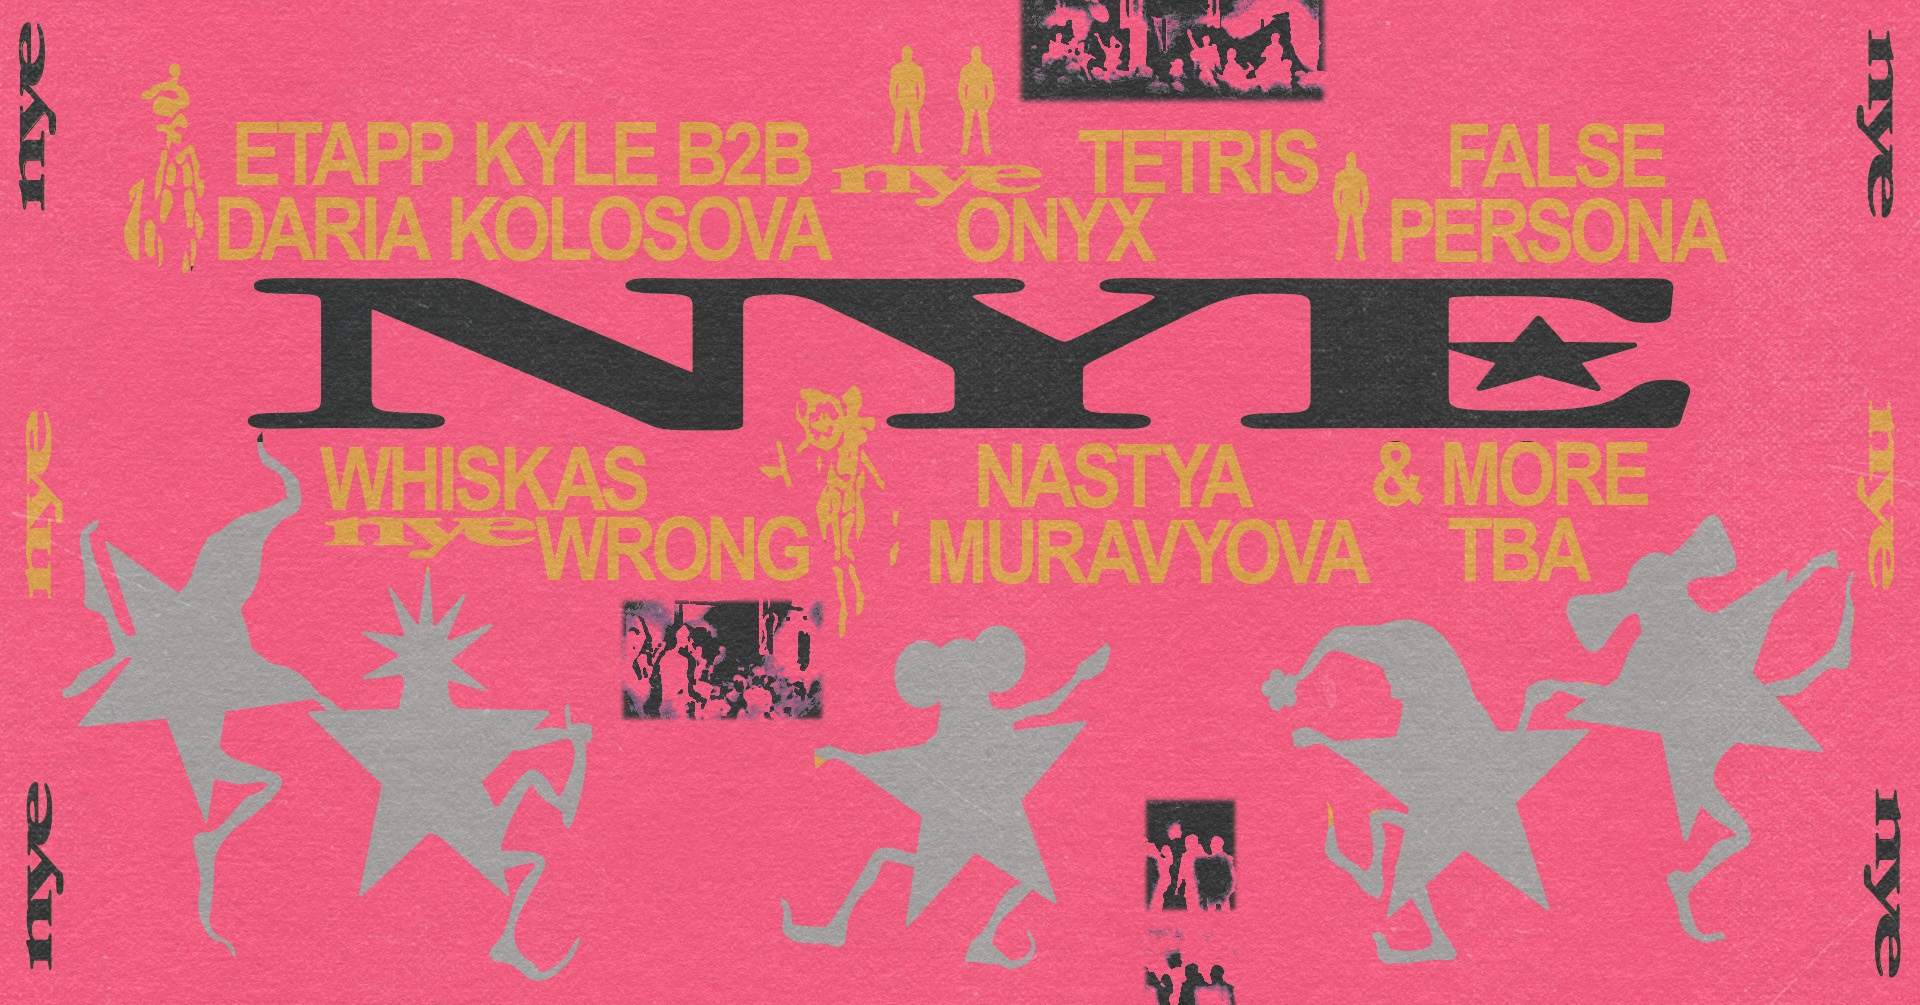 NYE: Daria Kolosova + Etapp Kyle + NASTYA MURAVYOVA + False Persona - フライヤー表